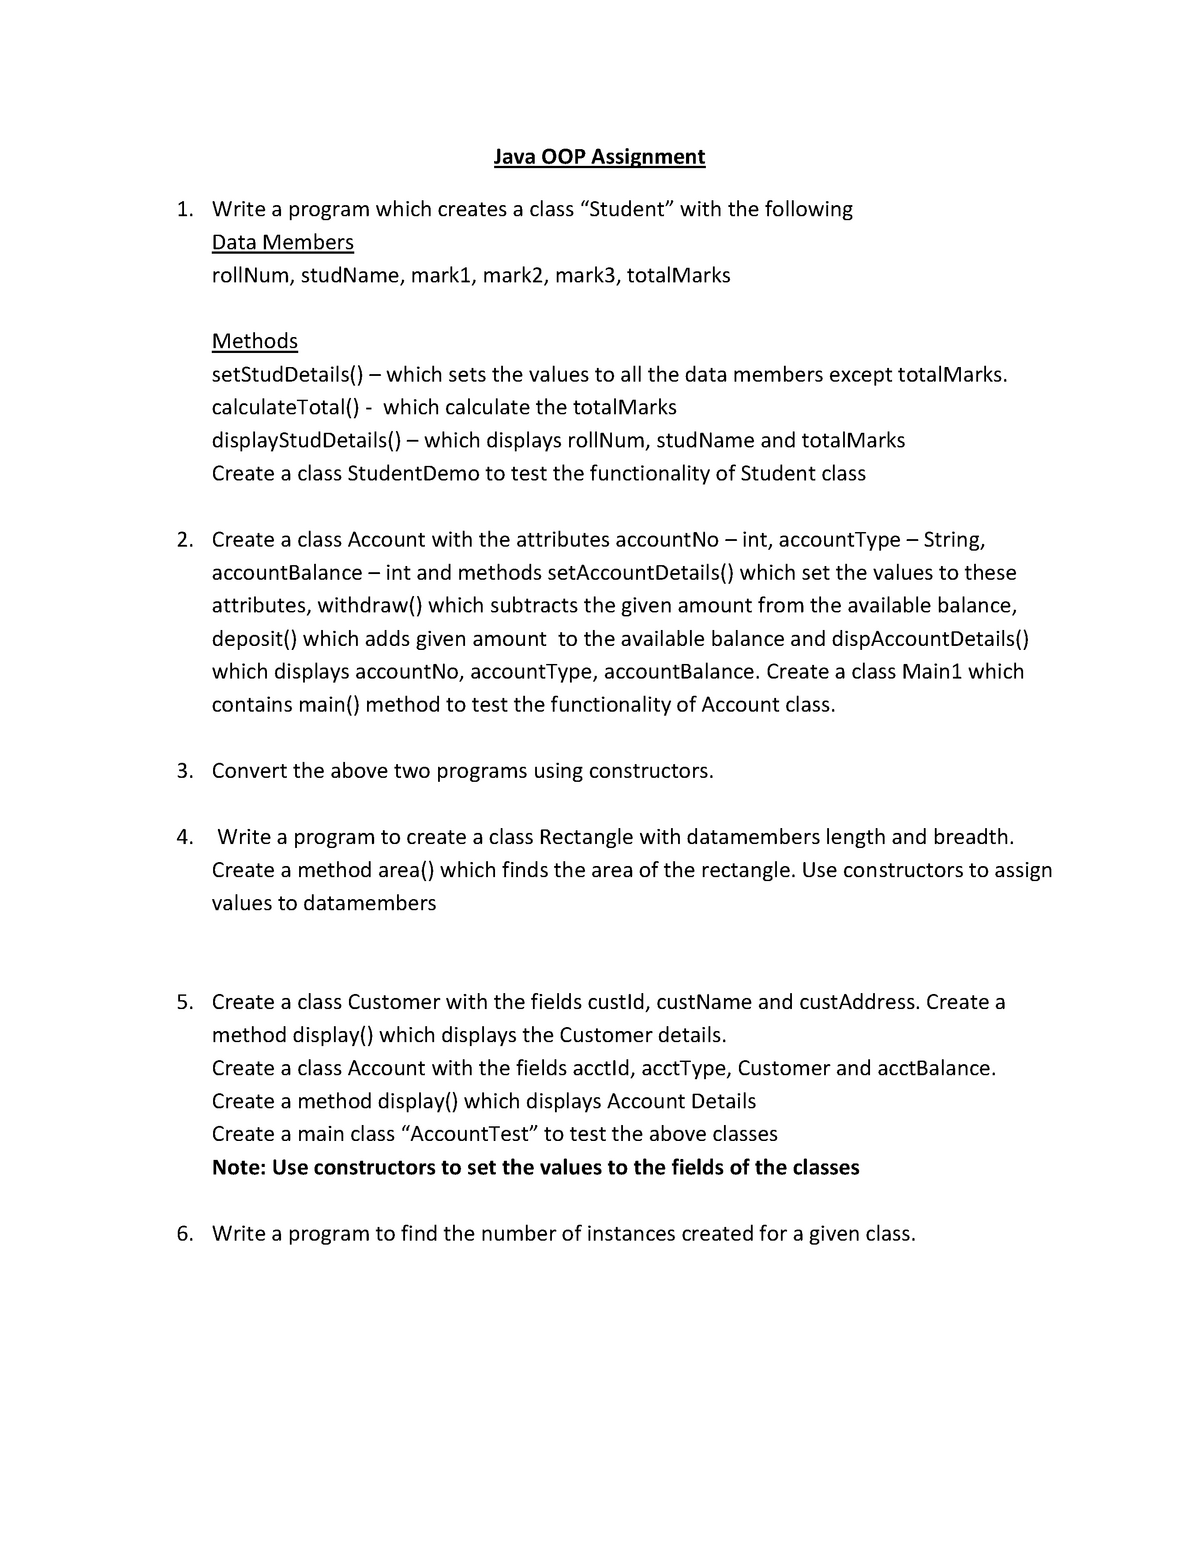 java assignment questions pdf